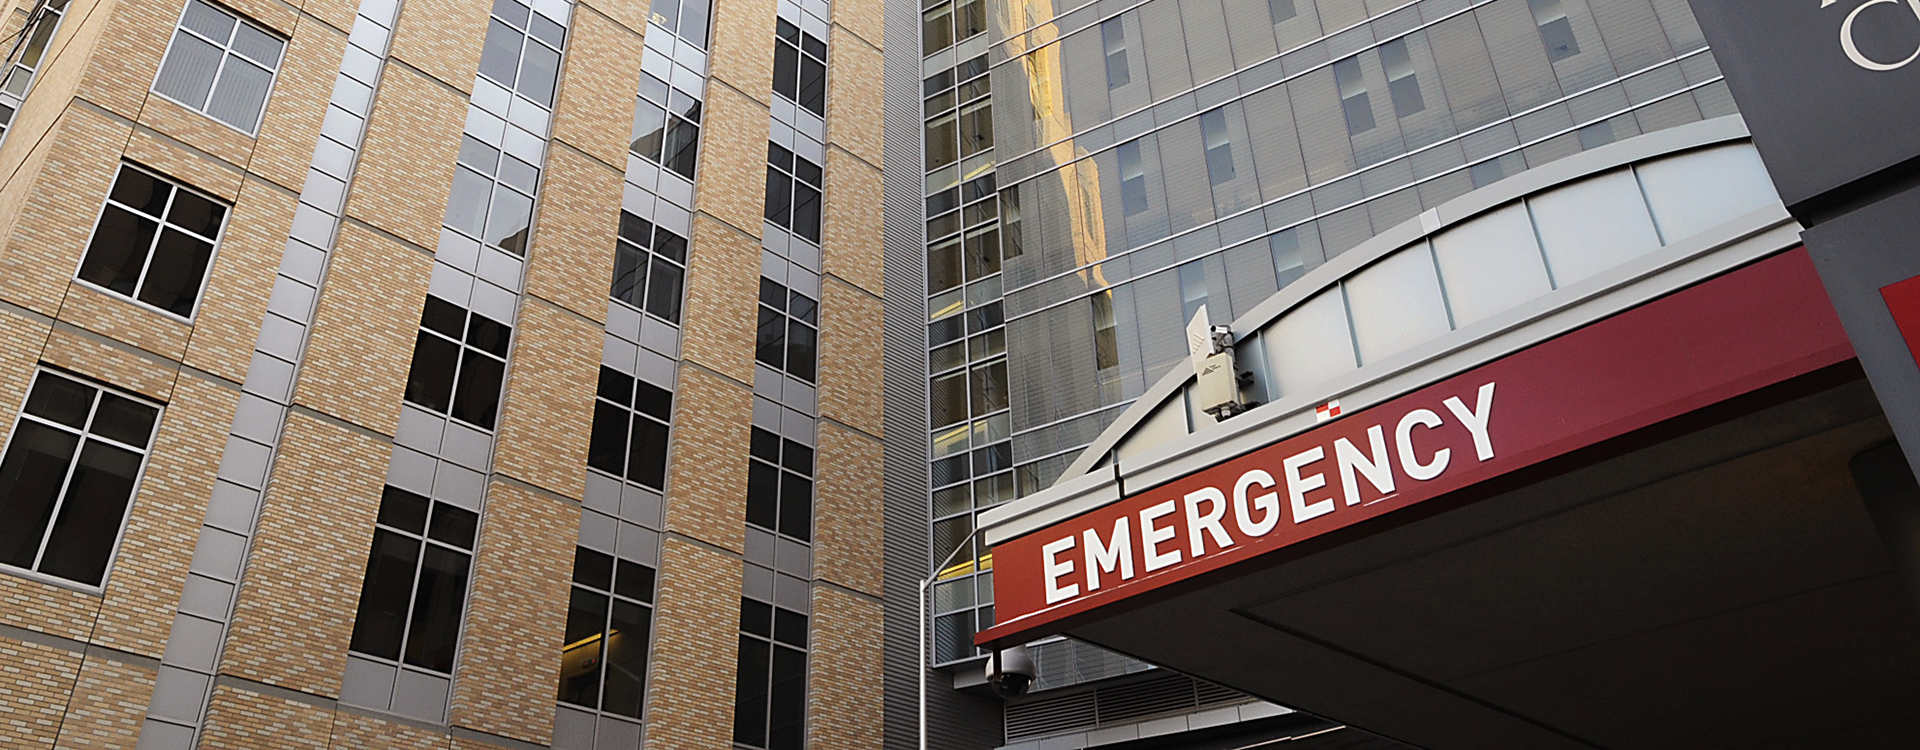 Harborview emergency room entrance